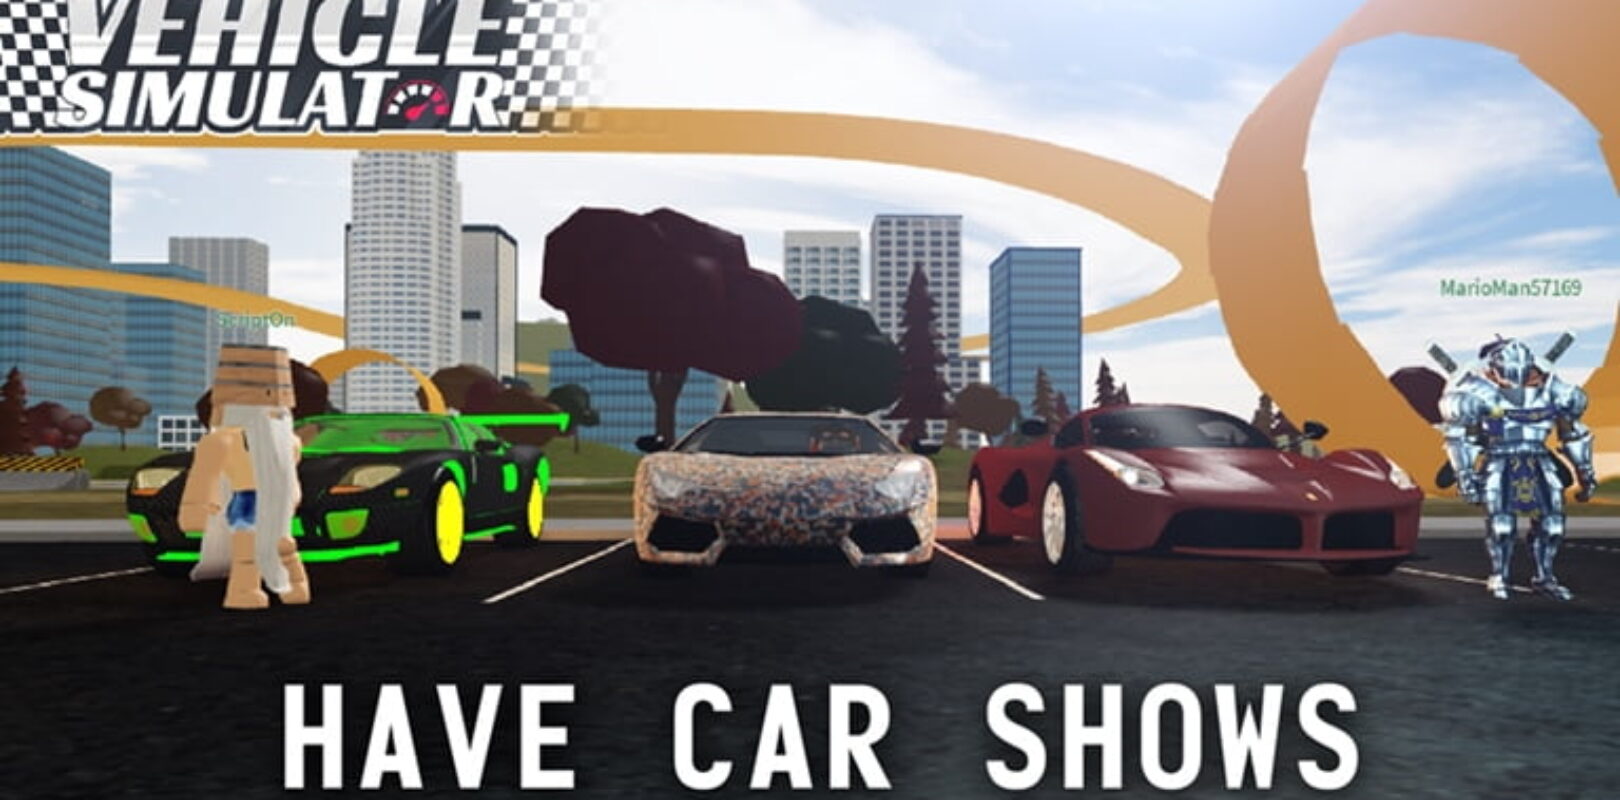 Vehicle Simulator Codes 2020 Pivotal Gamers - codes to vehicle simulator roblox 2019